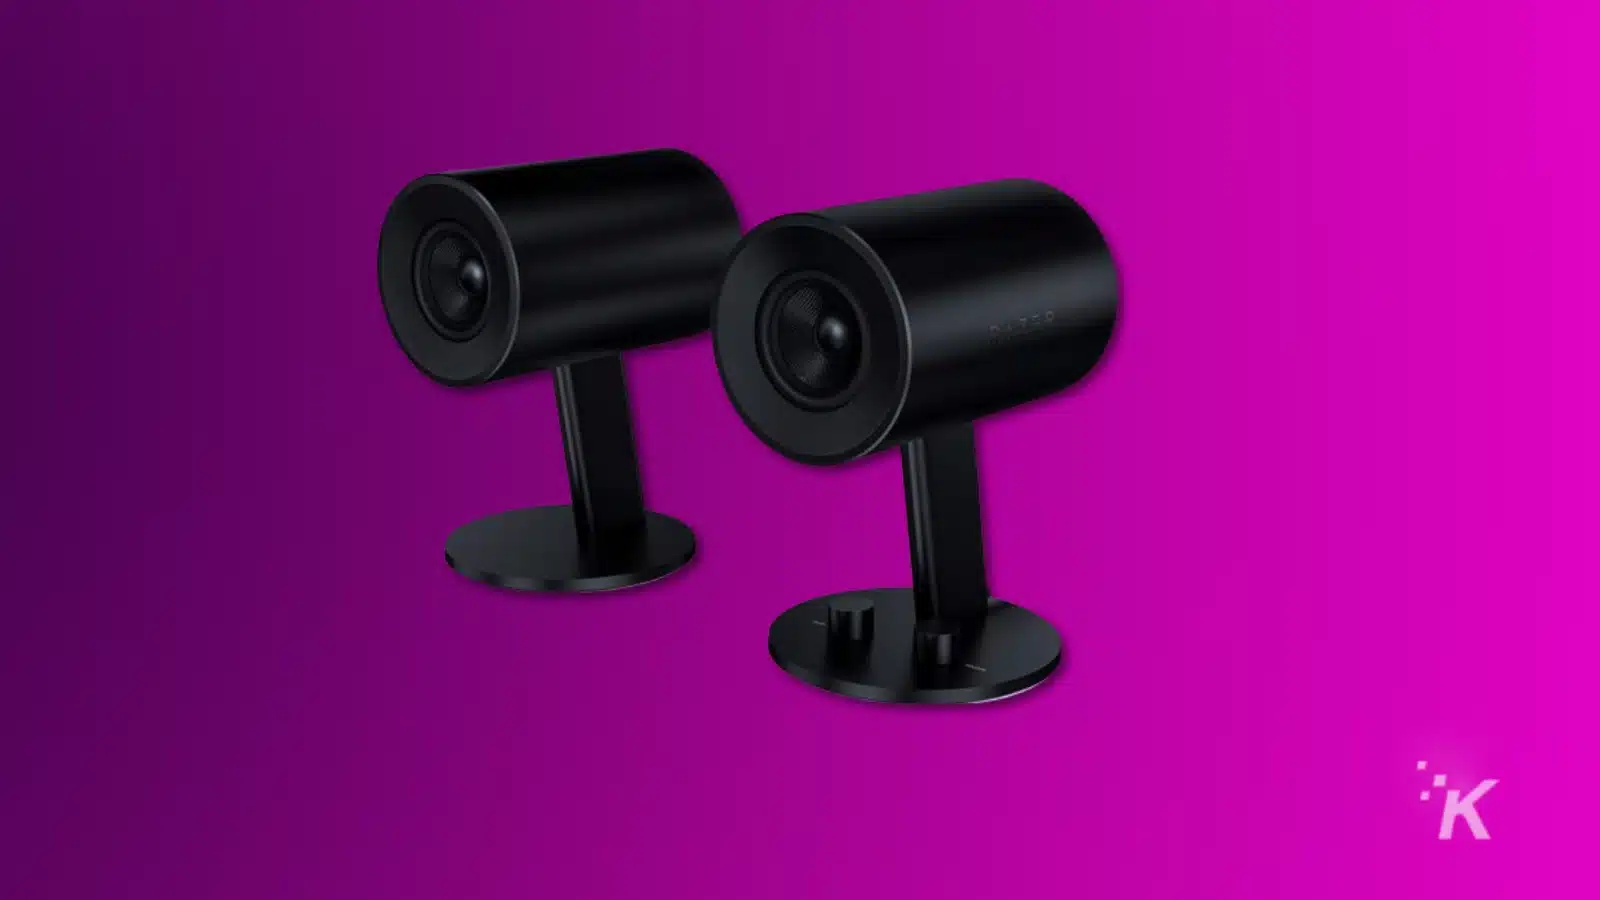 Render of razer nommo chroma speakers on a purple background